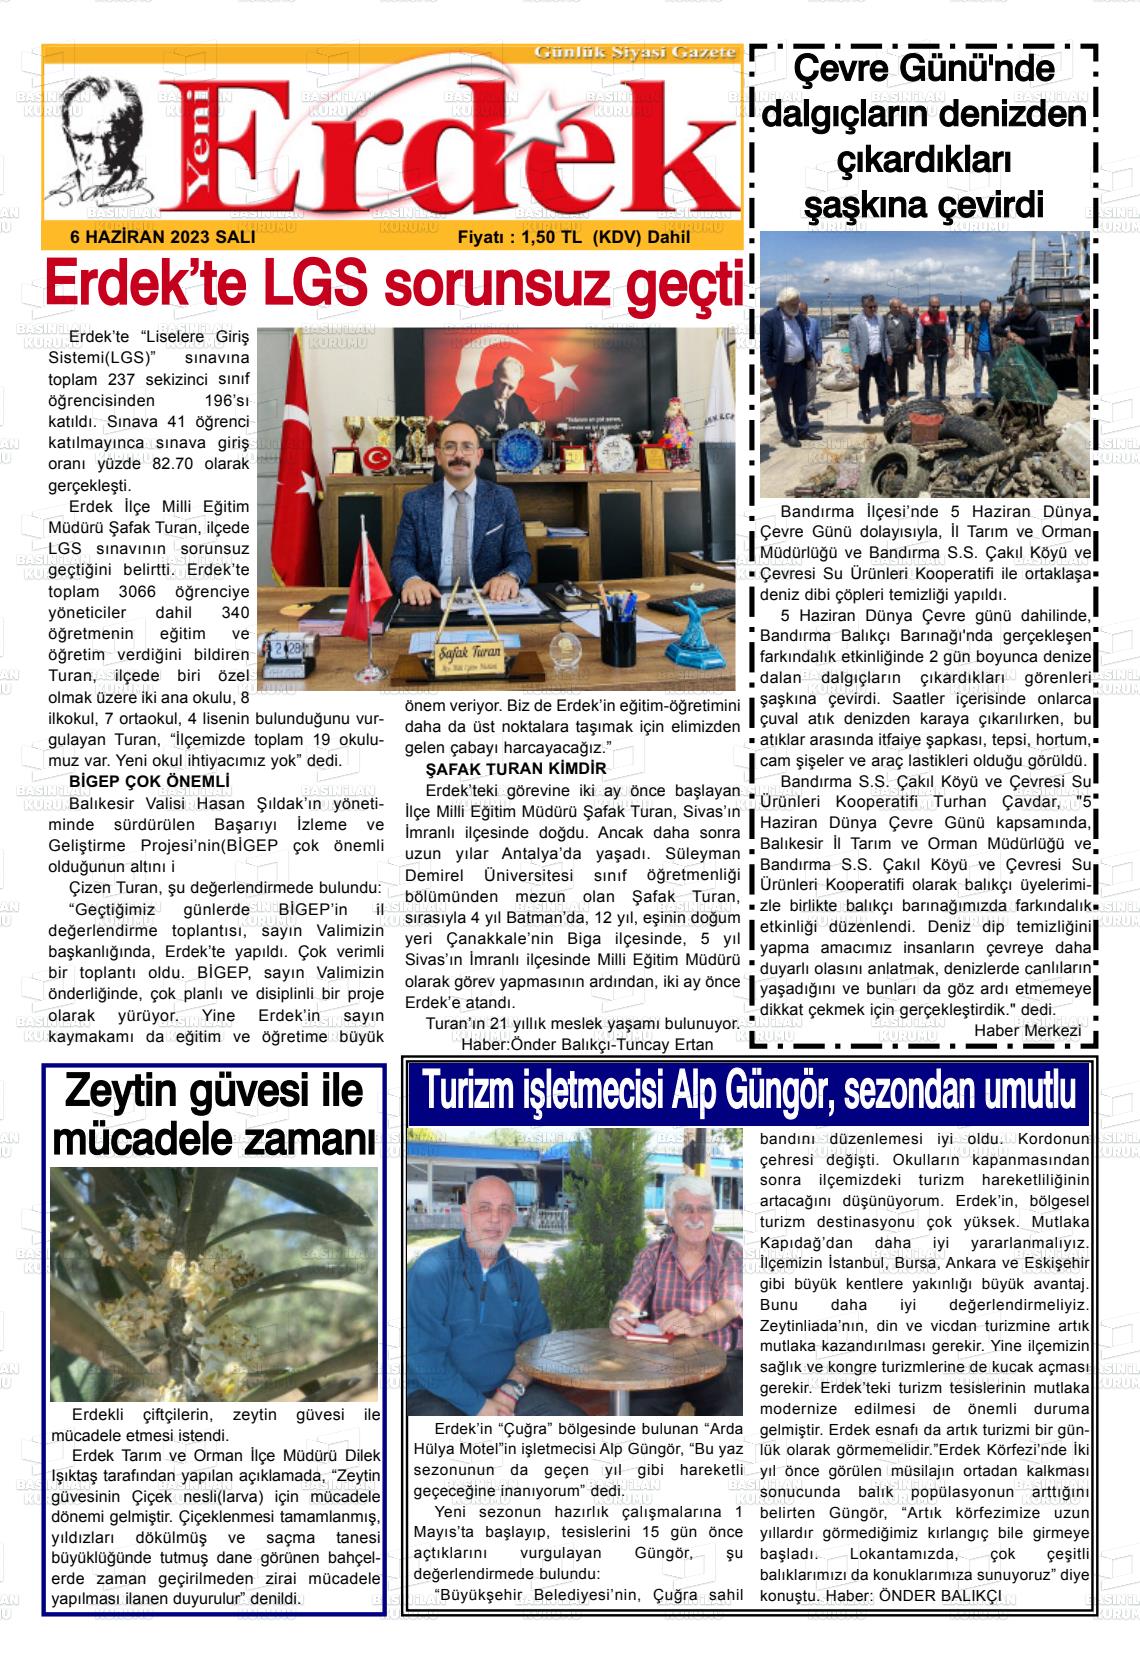 06 Haziran 2023 Yeni Erdek Gazete Manşeti